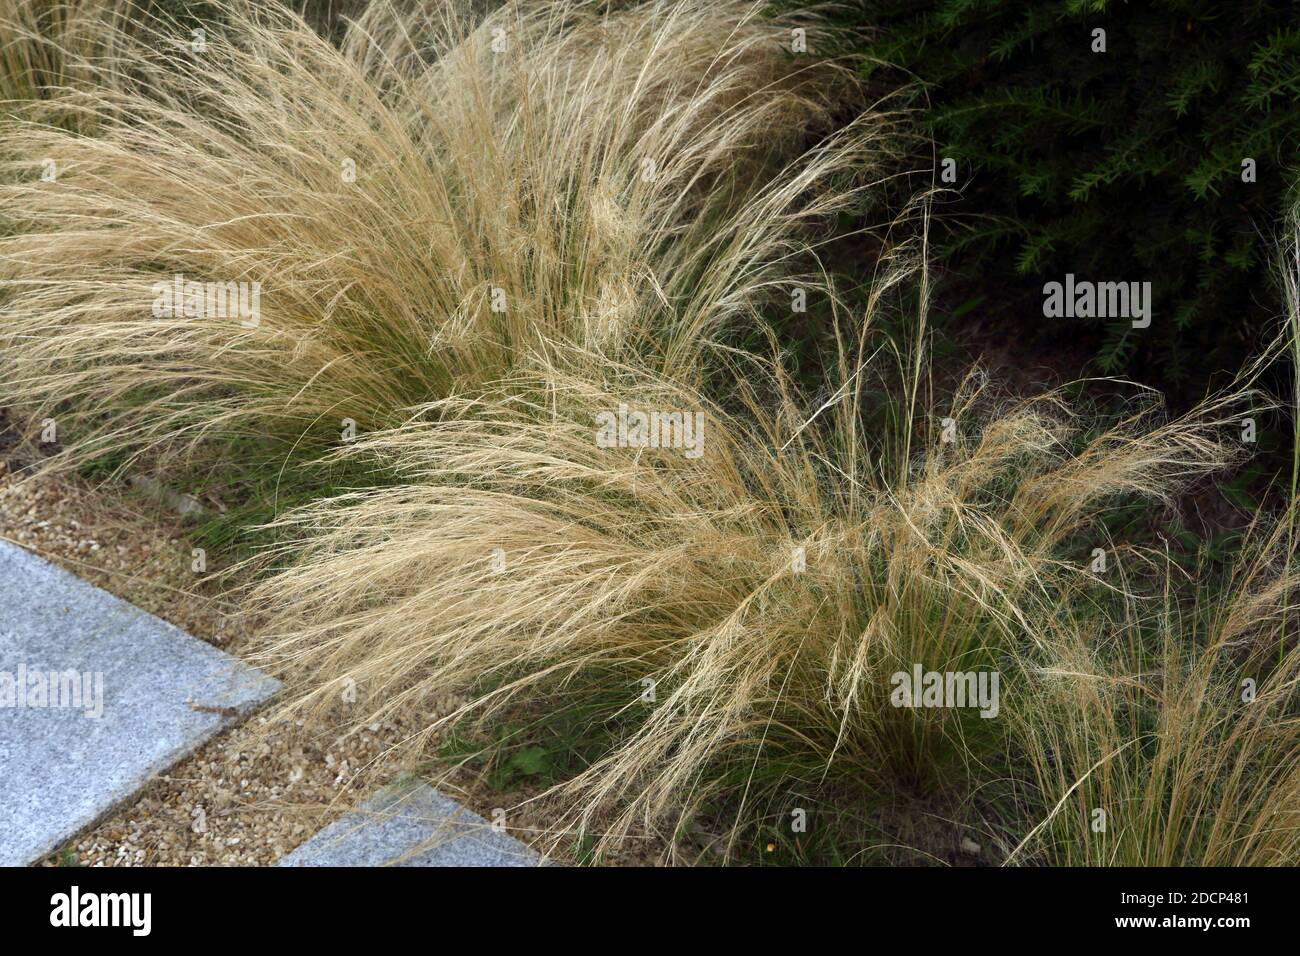 Mexican Feathergrass Lining a Path in Garden Surrey England Stock Photo